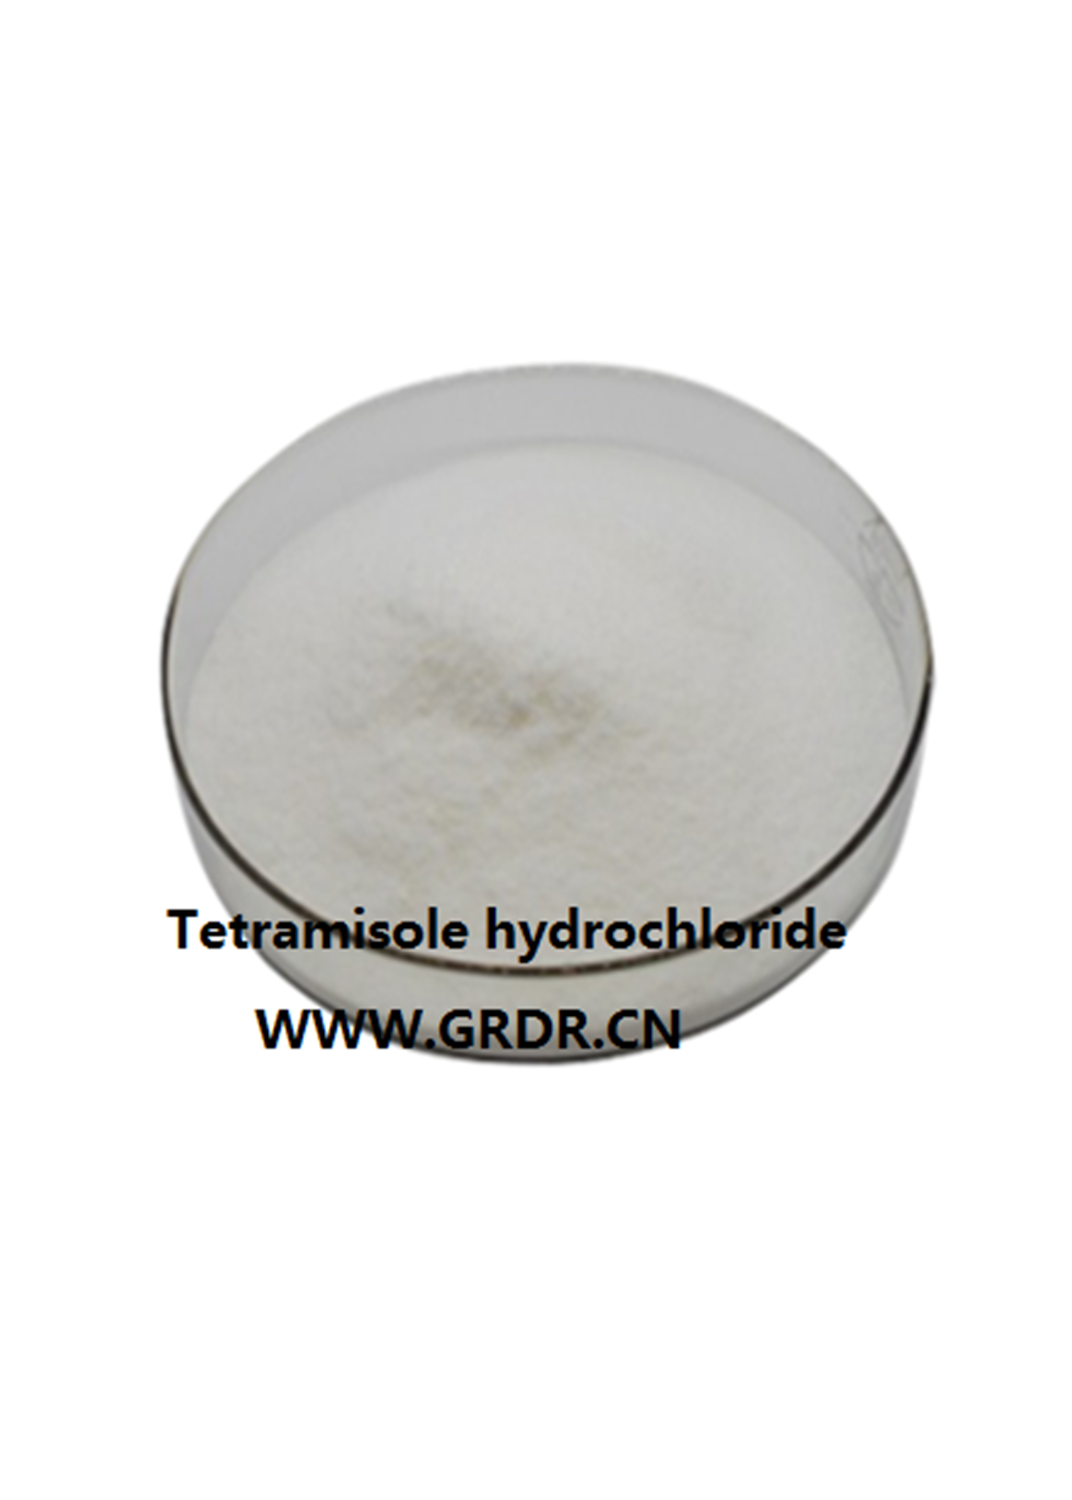 Tetraimidazole hydrochloride raw material powder animals use 